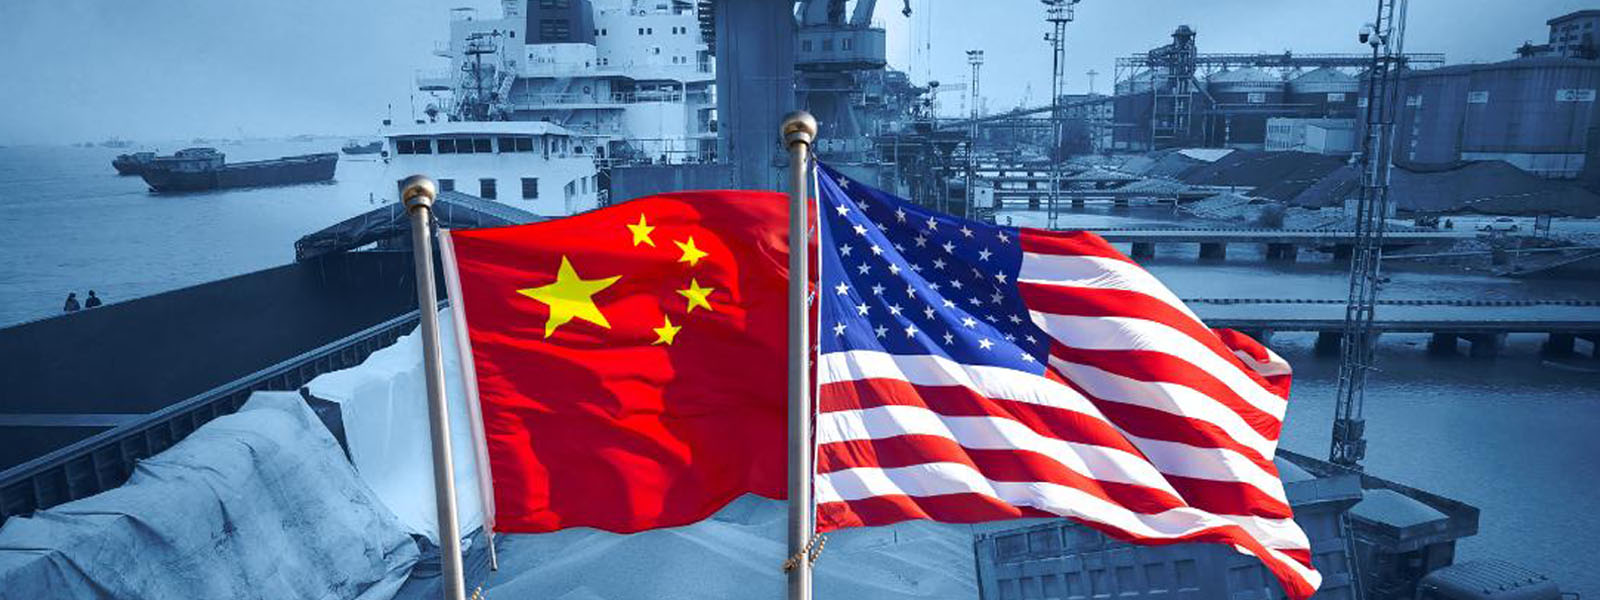 Sino-U.S. trade teams are "intensifying contact"